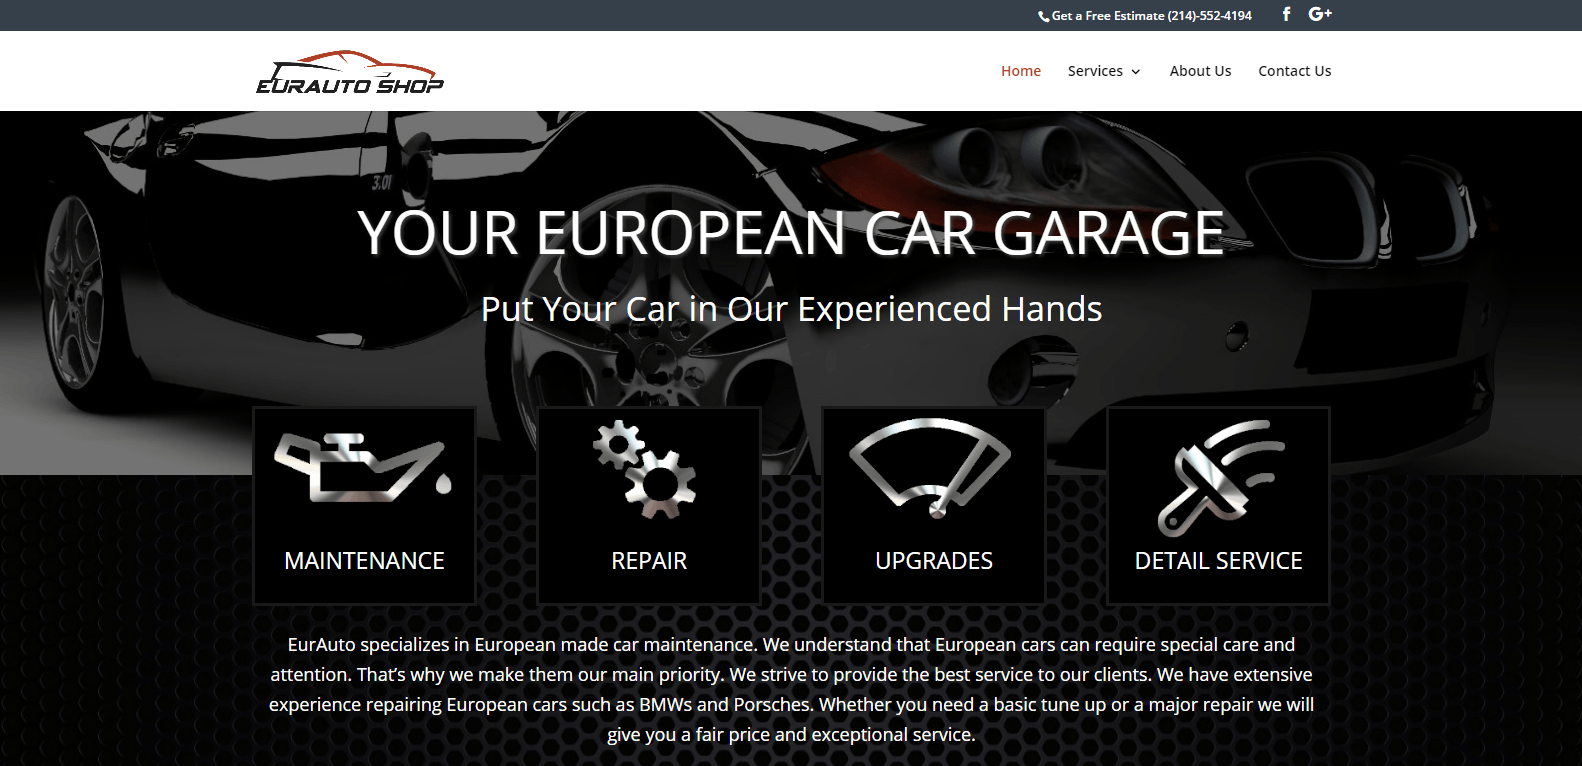 Website Colors Express Emotions, Like This European Car Garage Website Qualbe Marketing Group